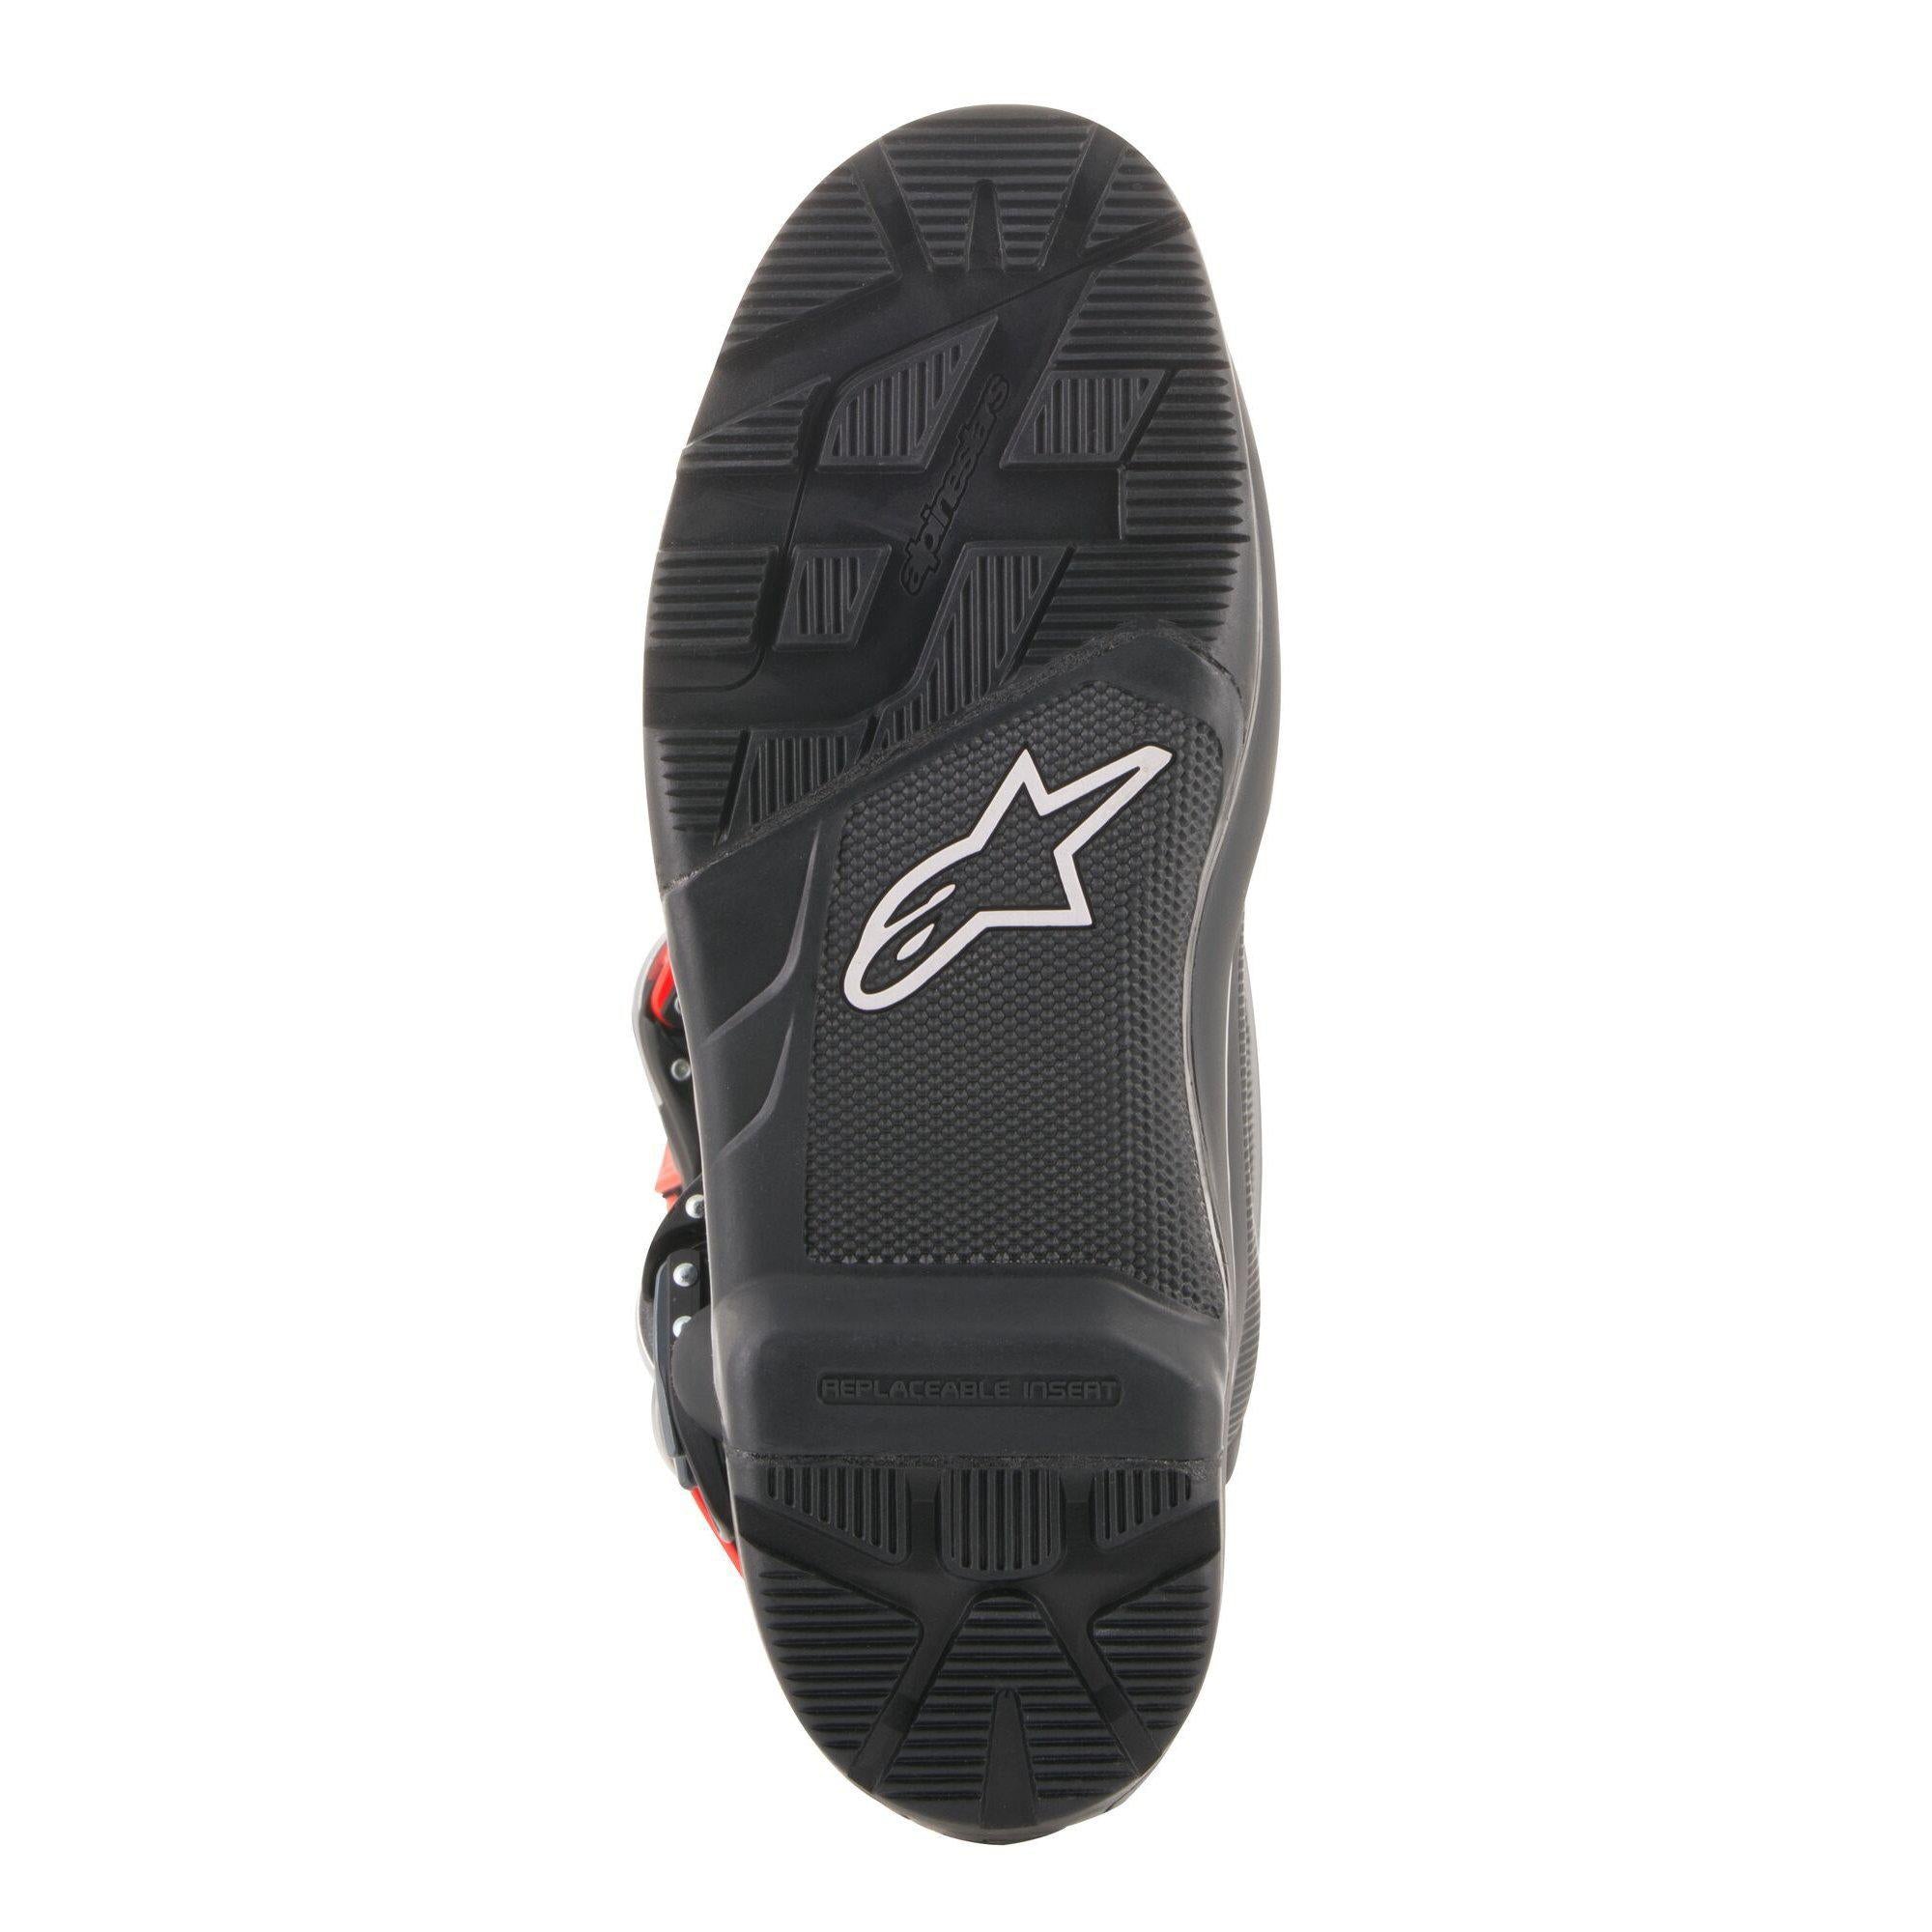 Tech 7 Enduro Boots Black Size 10 - Click Image to Close